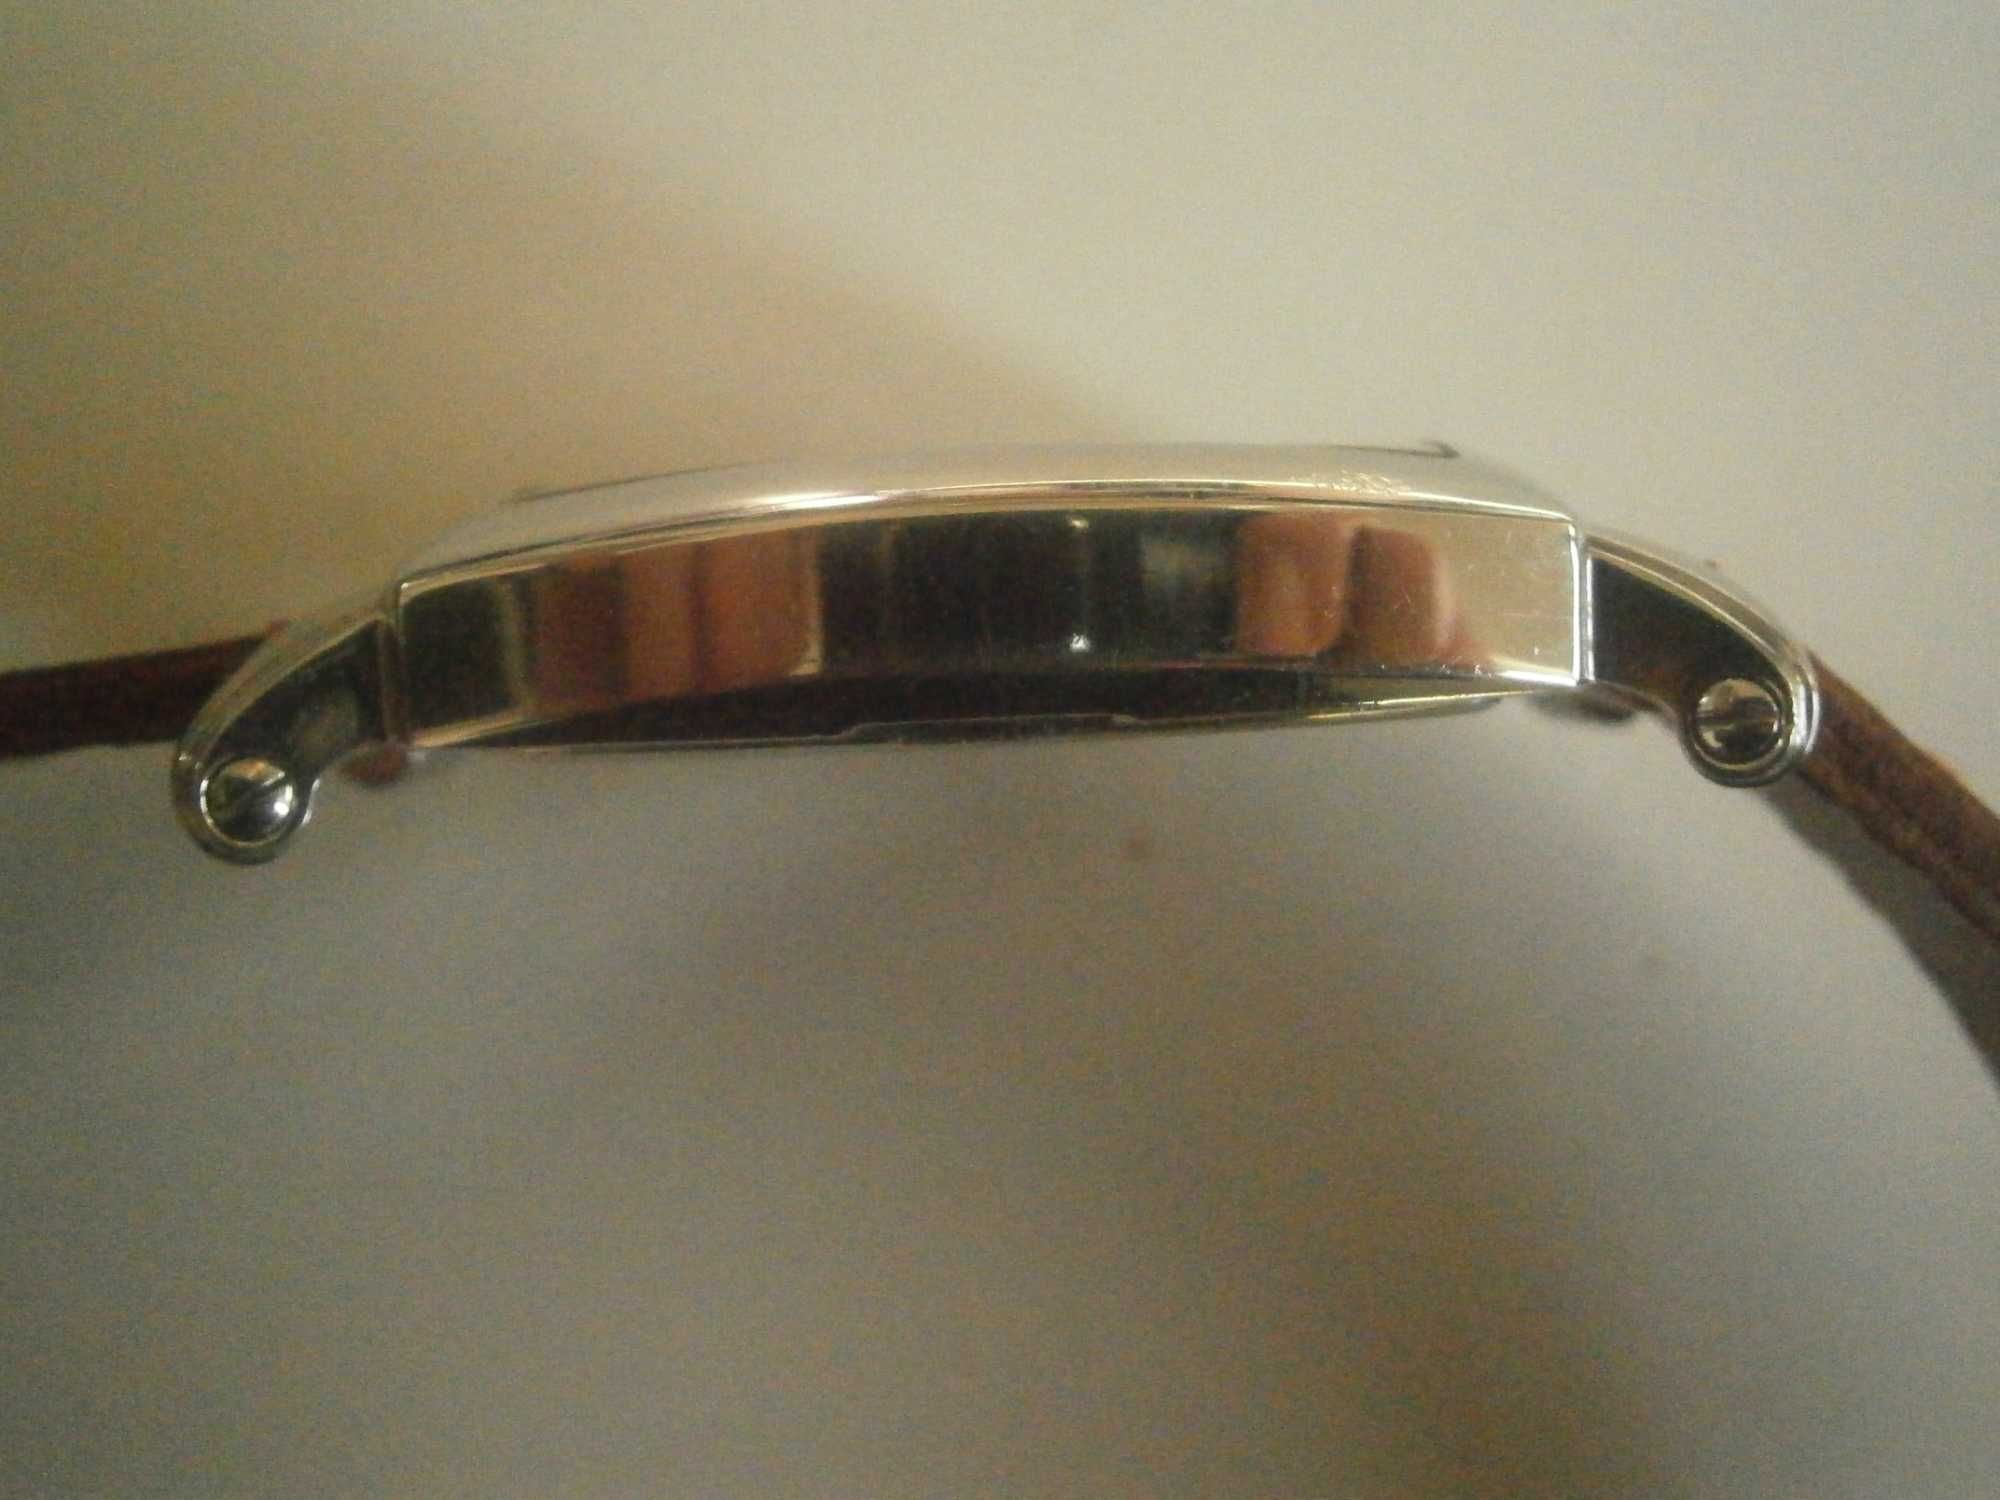 PIERRE CARDIN, Quartz, St. Steel, original product, XL timepiece